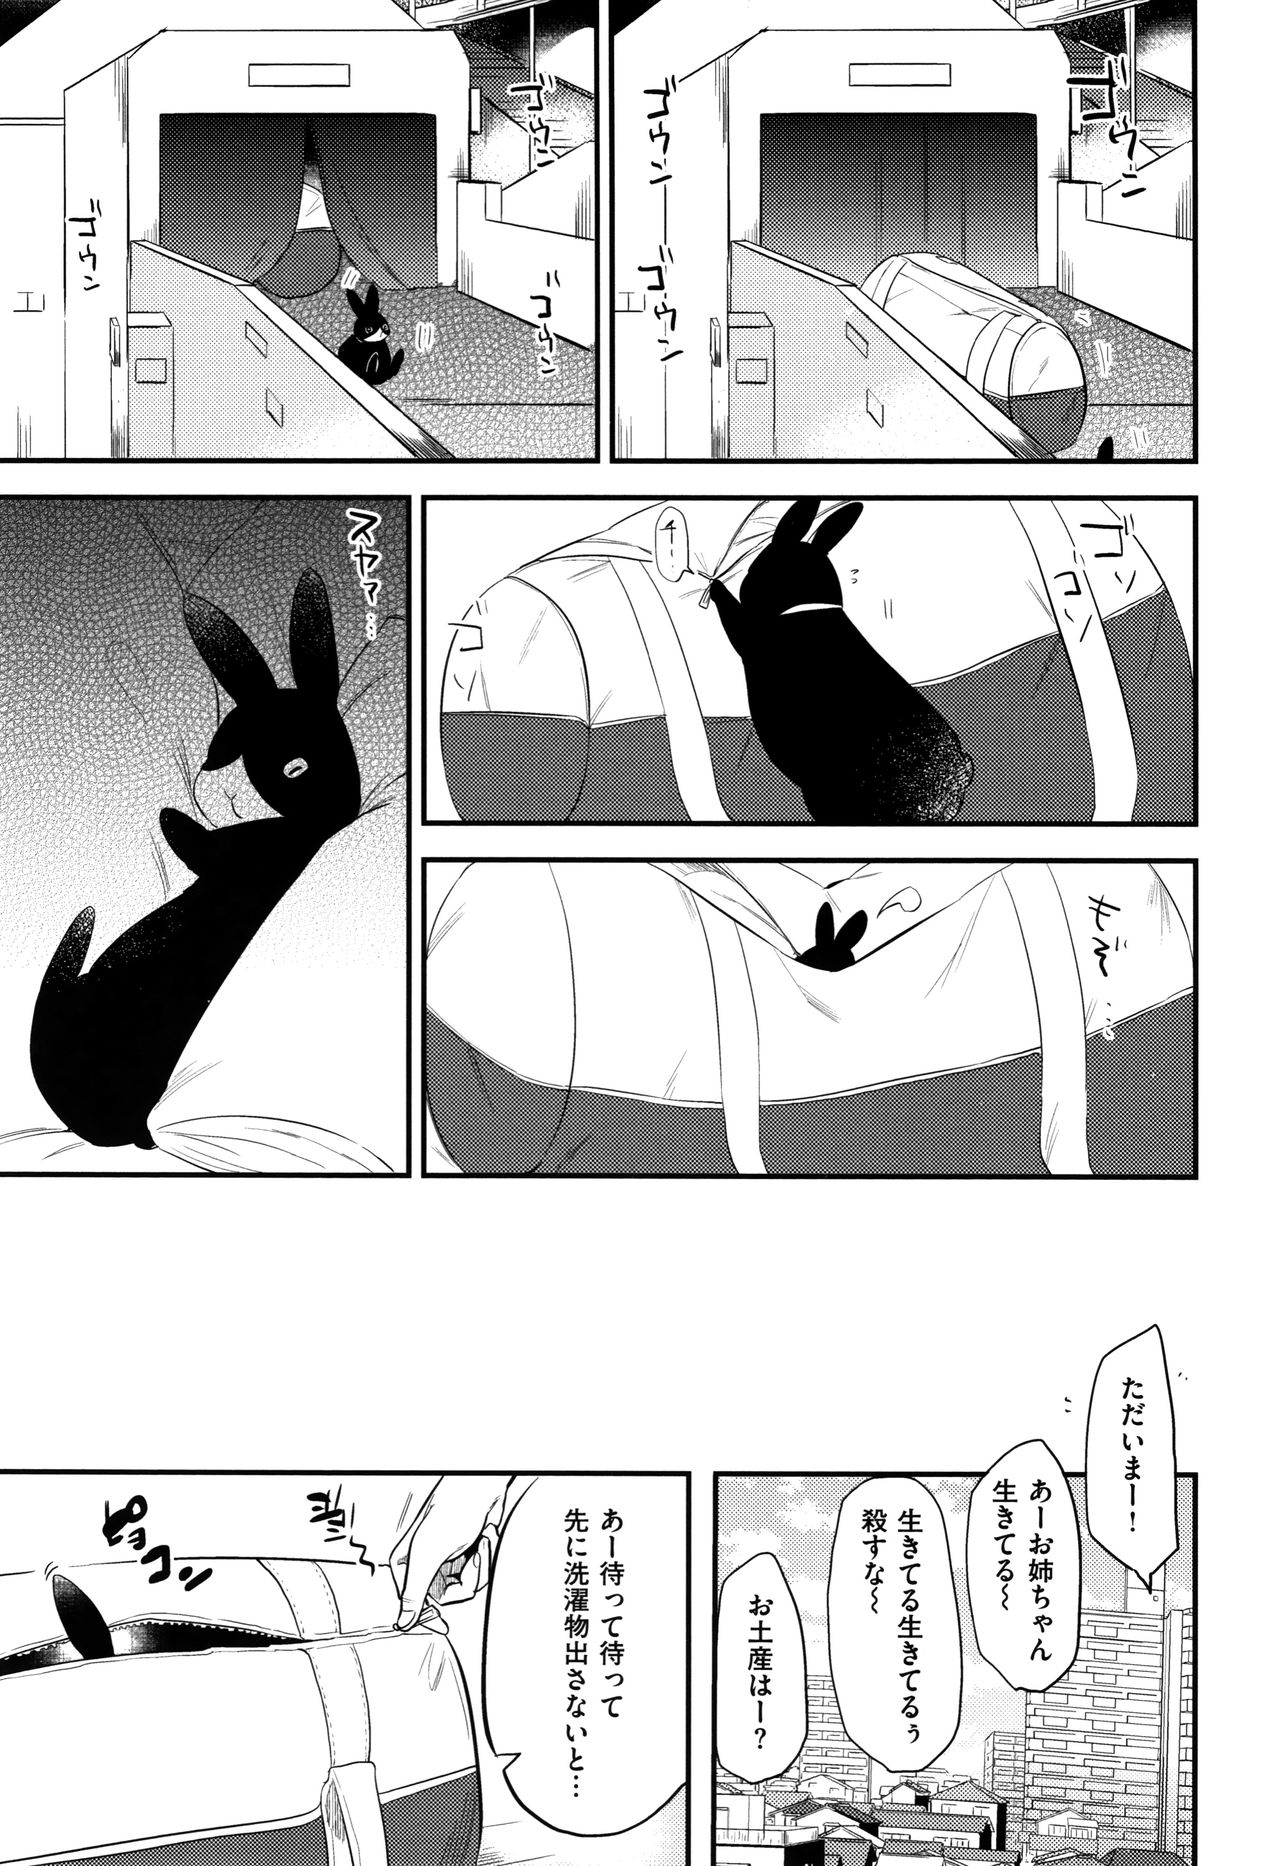 [Momoko] Rabbit Paradise [ももこ] Rabbit Paradise